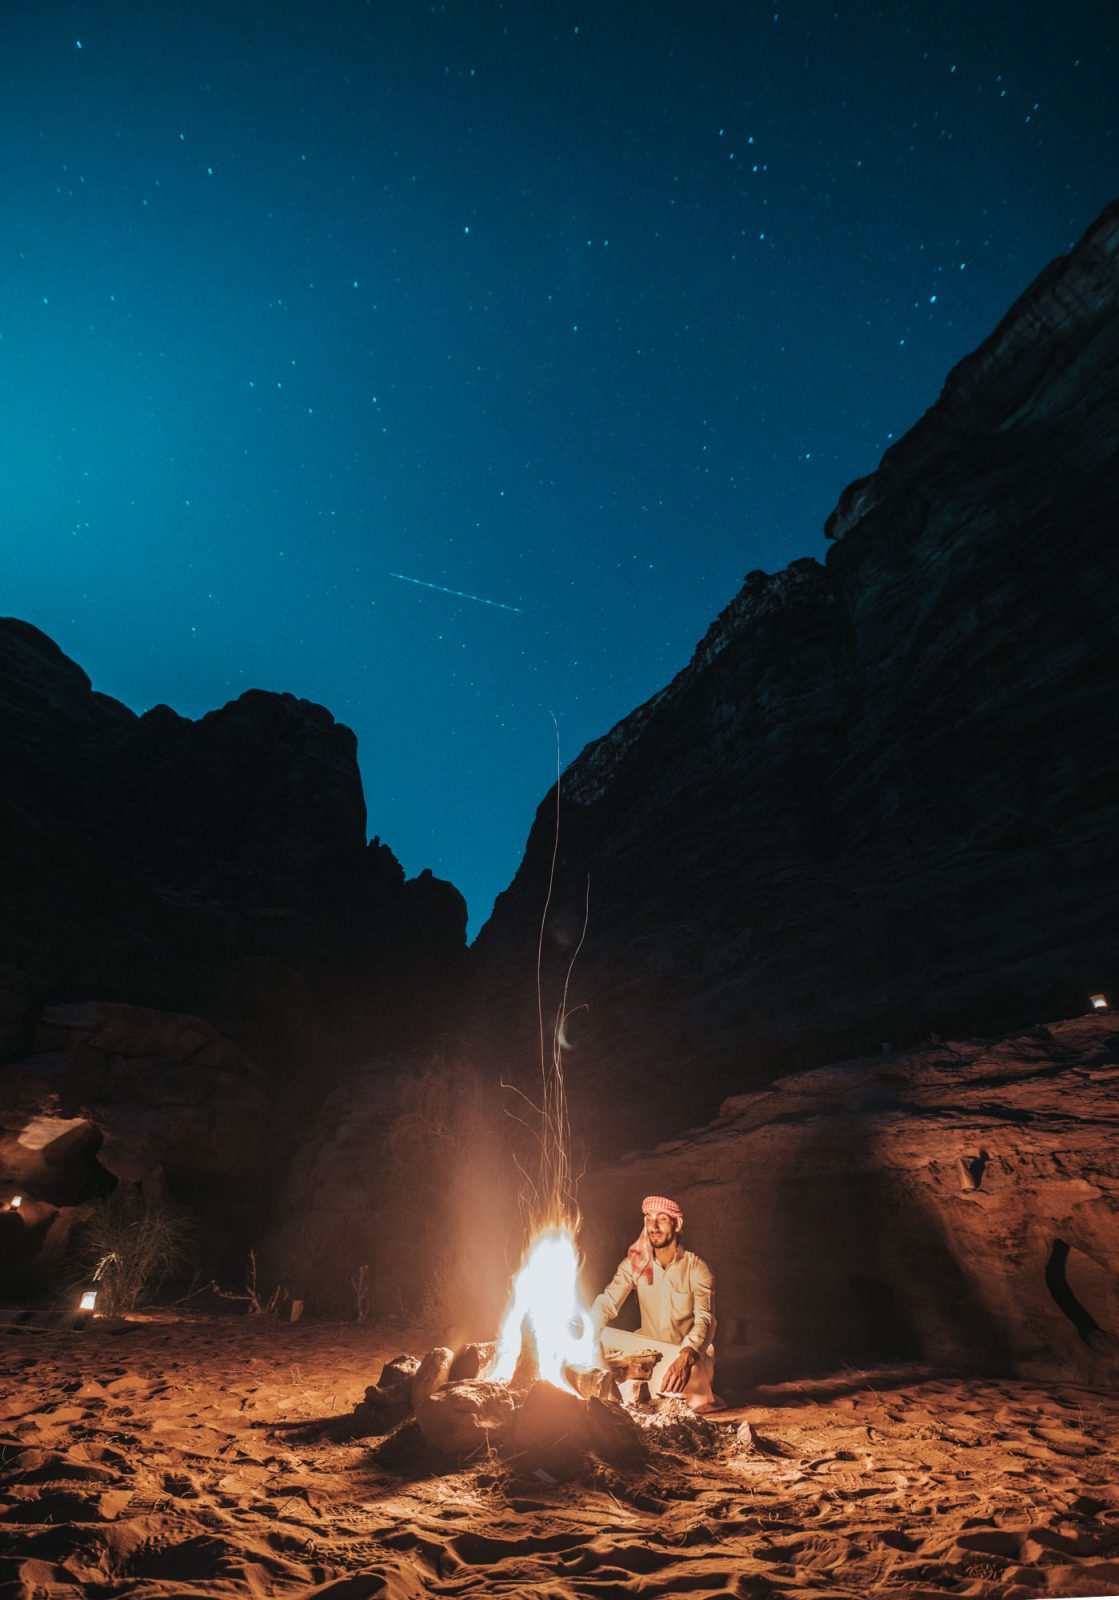 Places to visit in Jordan: Wadi Rum